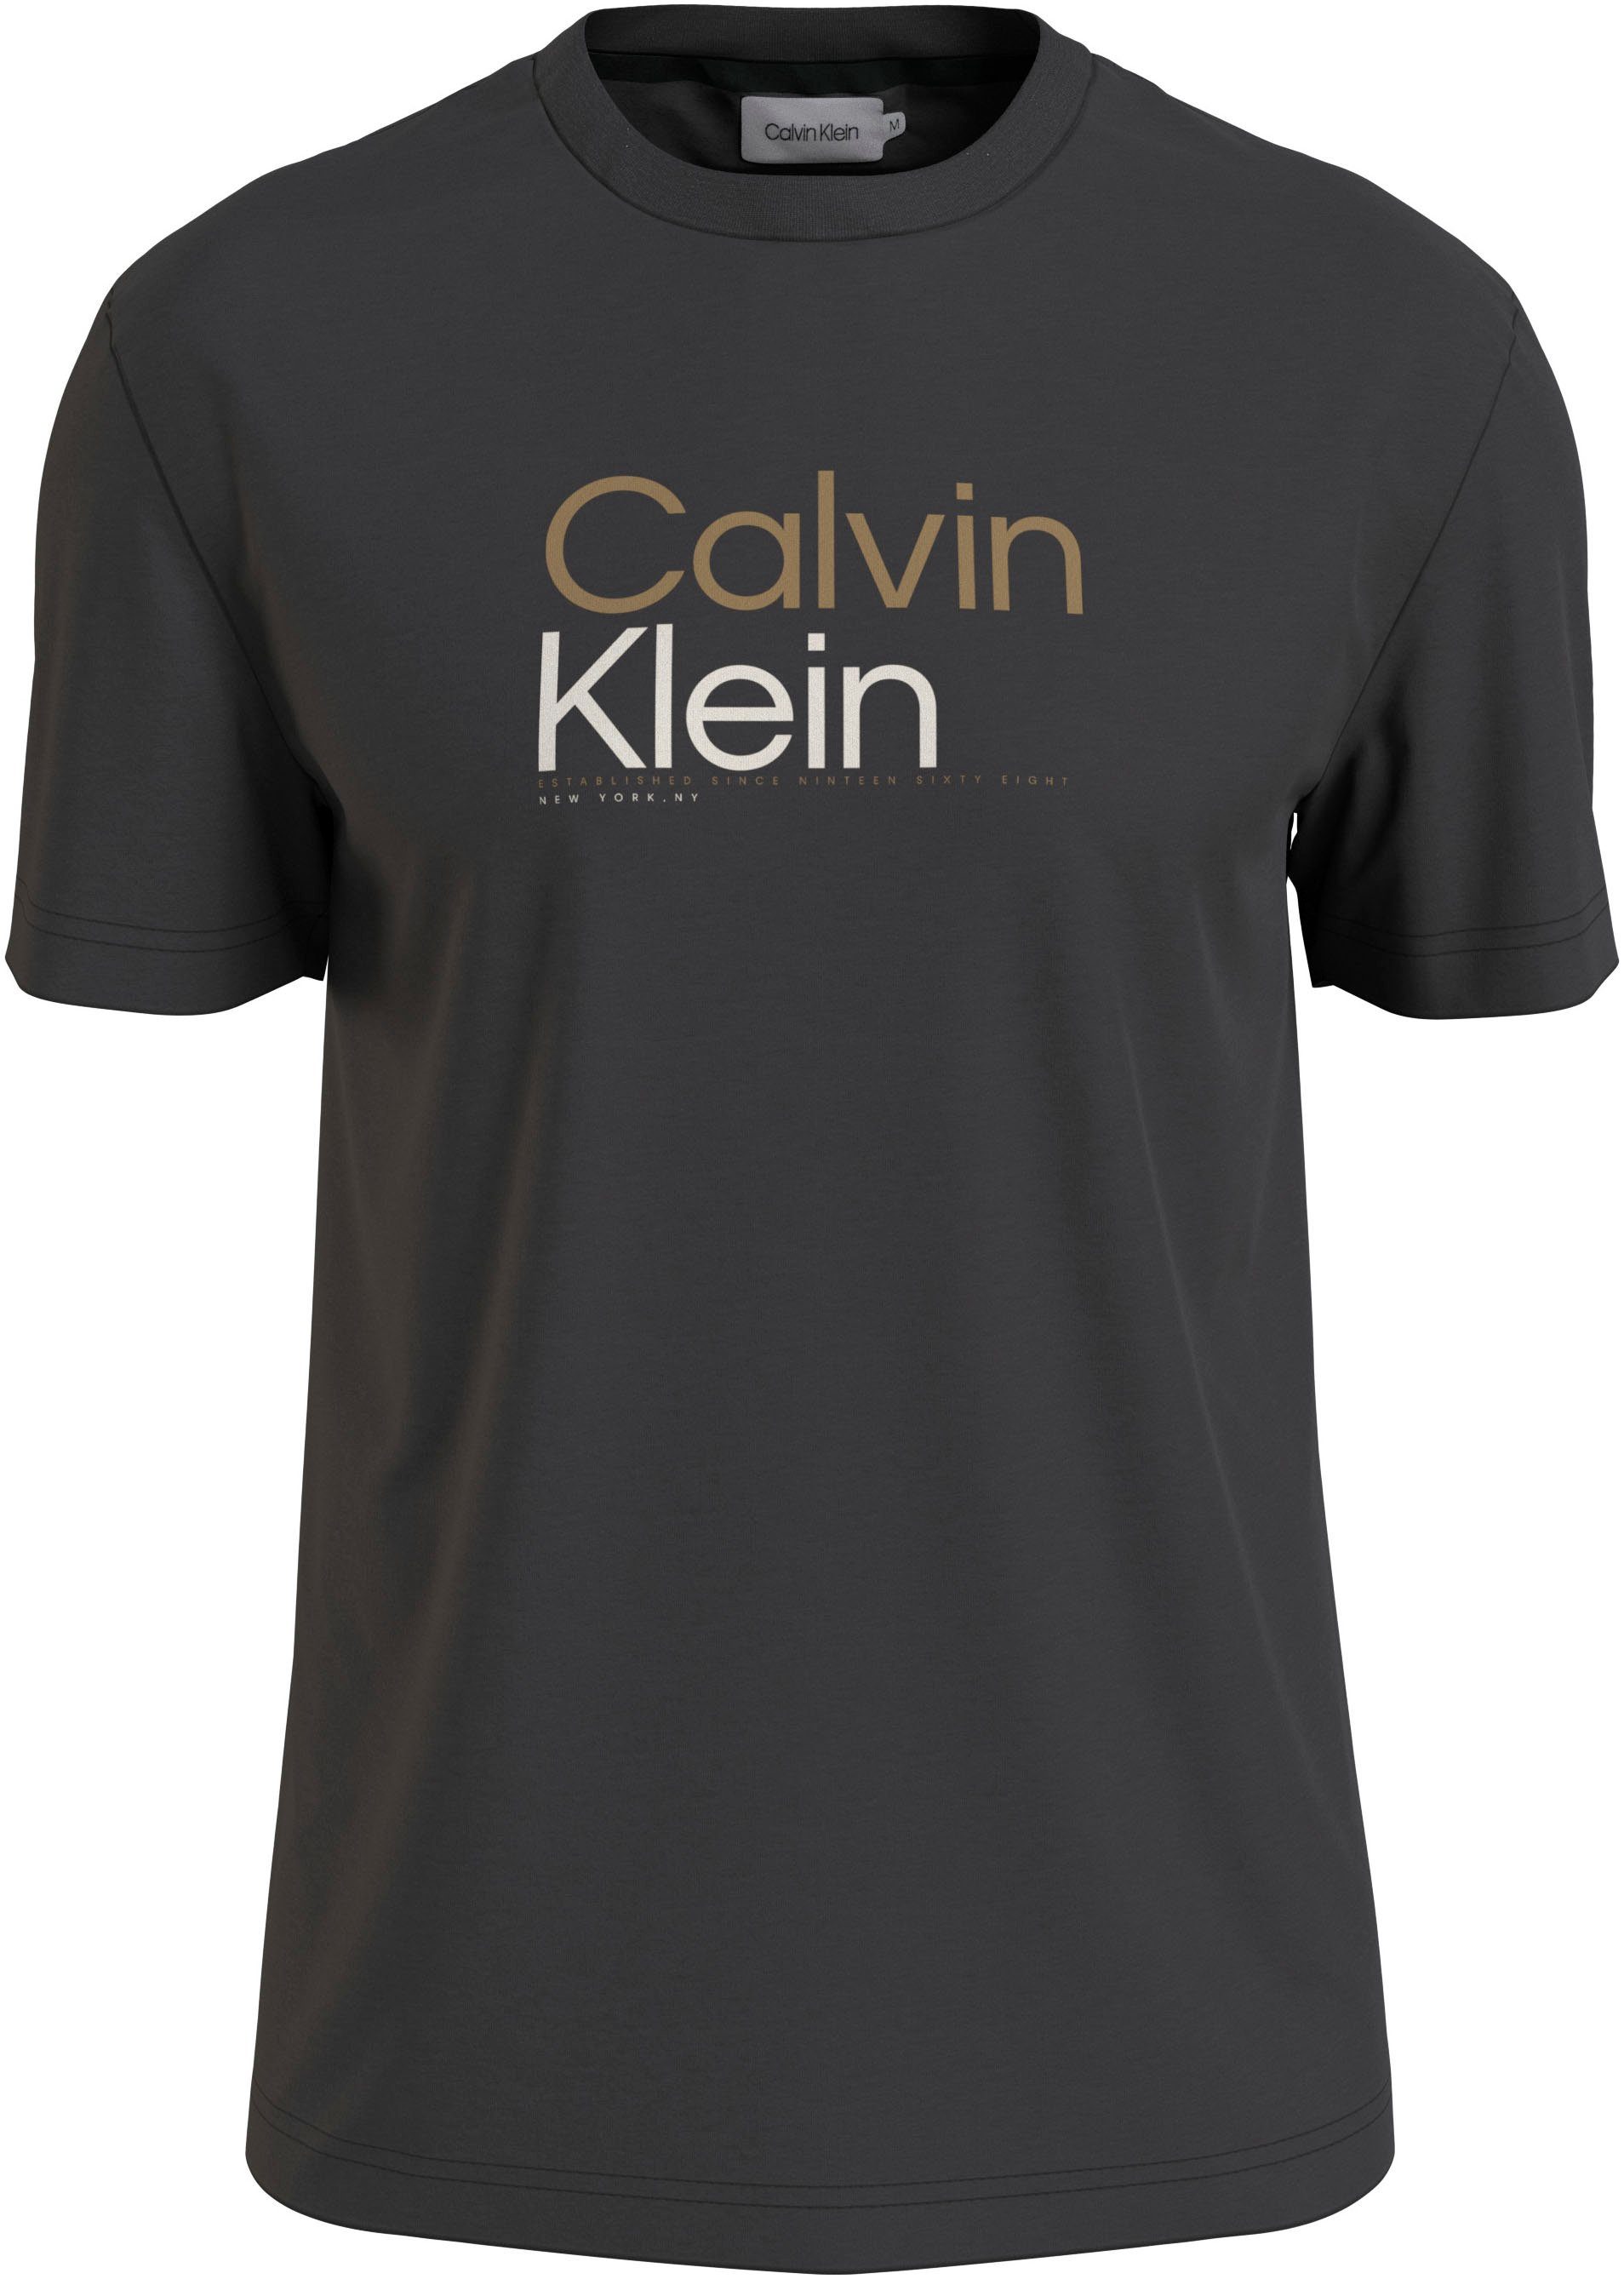 Calvin Klein Big&Tall T-Shirt BT_MULTI T-SHIRT Black Ck Markenlabel LOGO mit COLOR